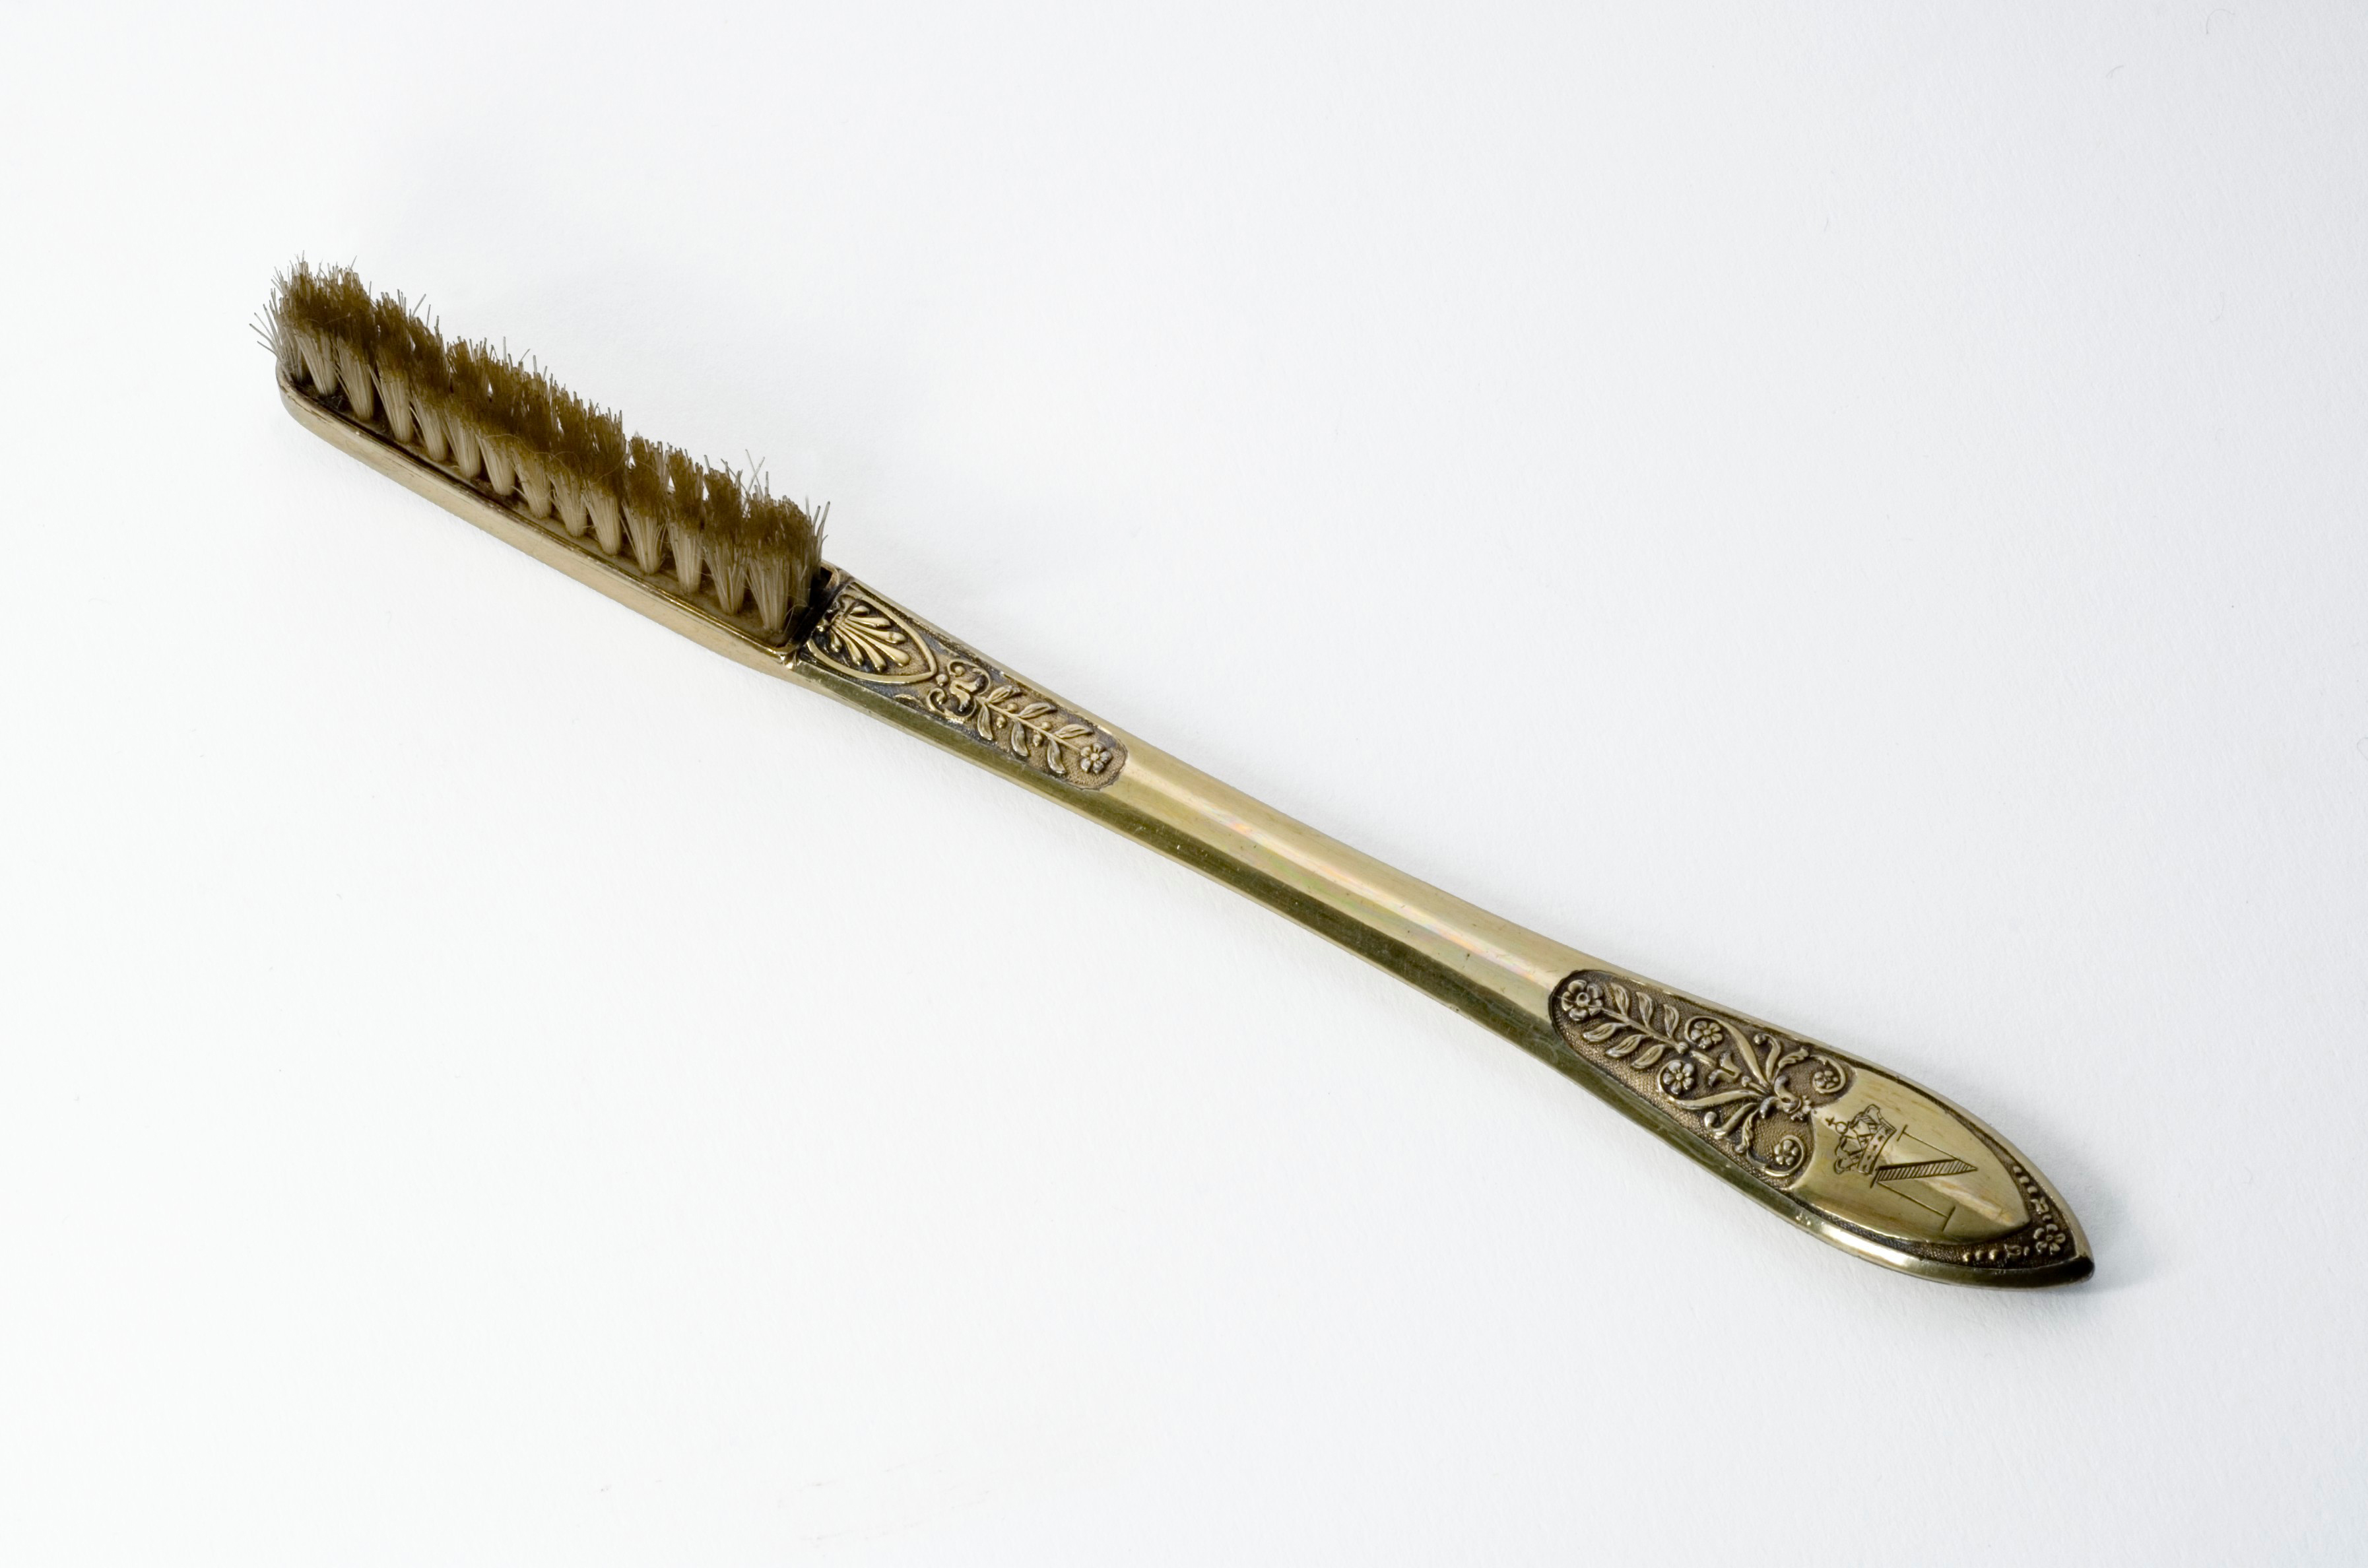 Napoleon Bonaparte's toothbrush (Wellcome Collection)